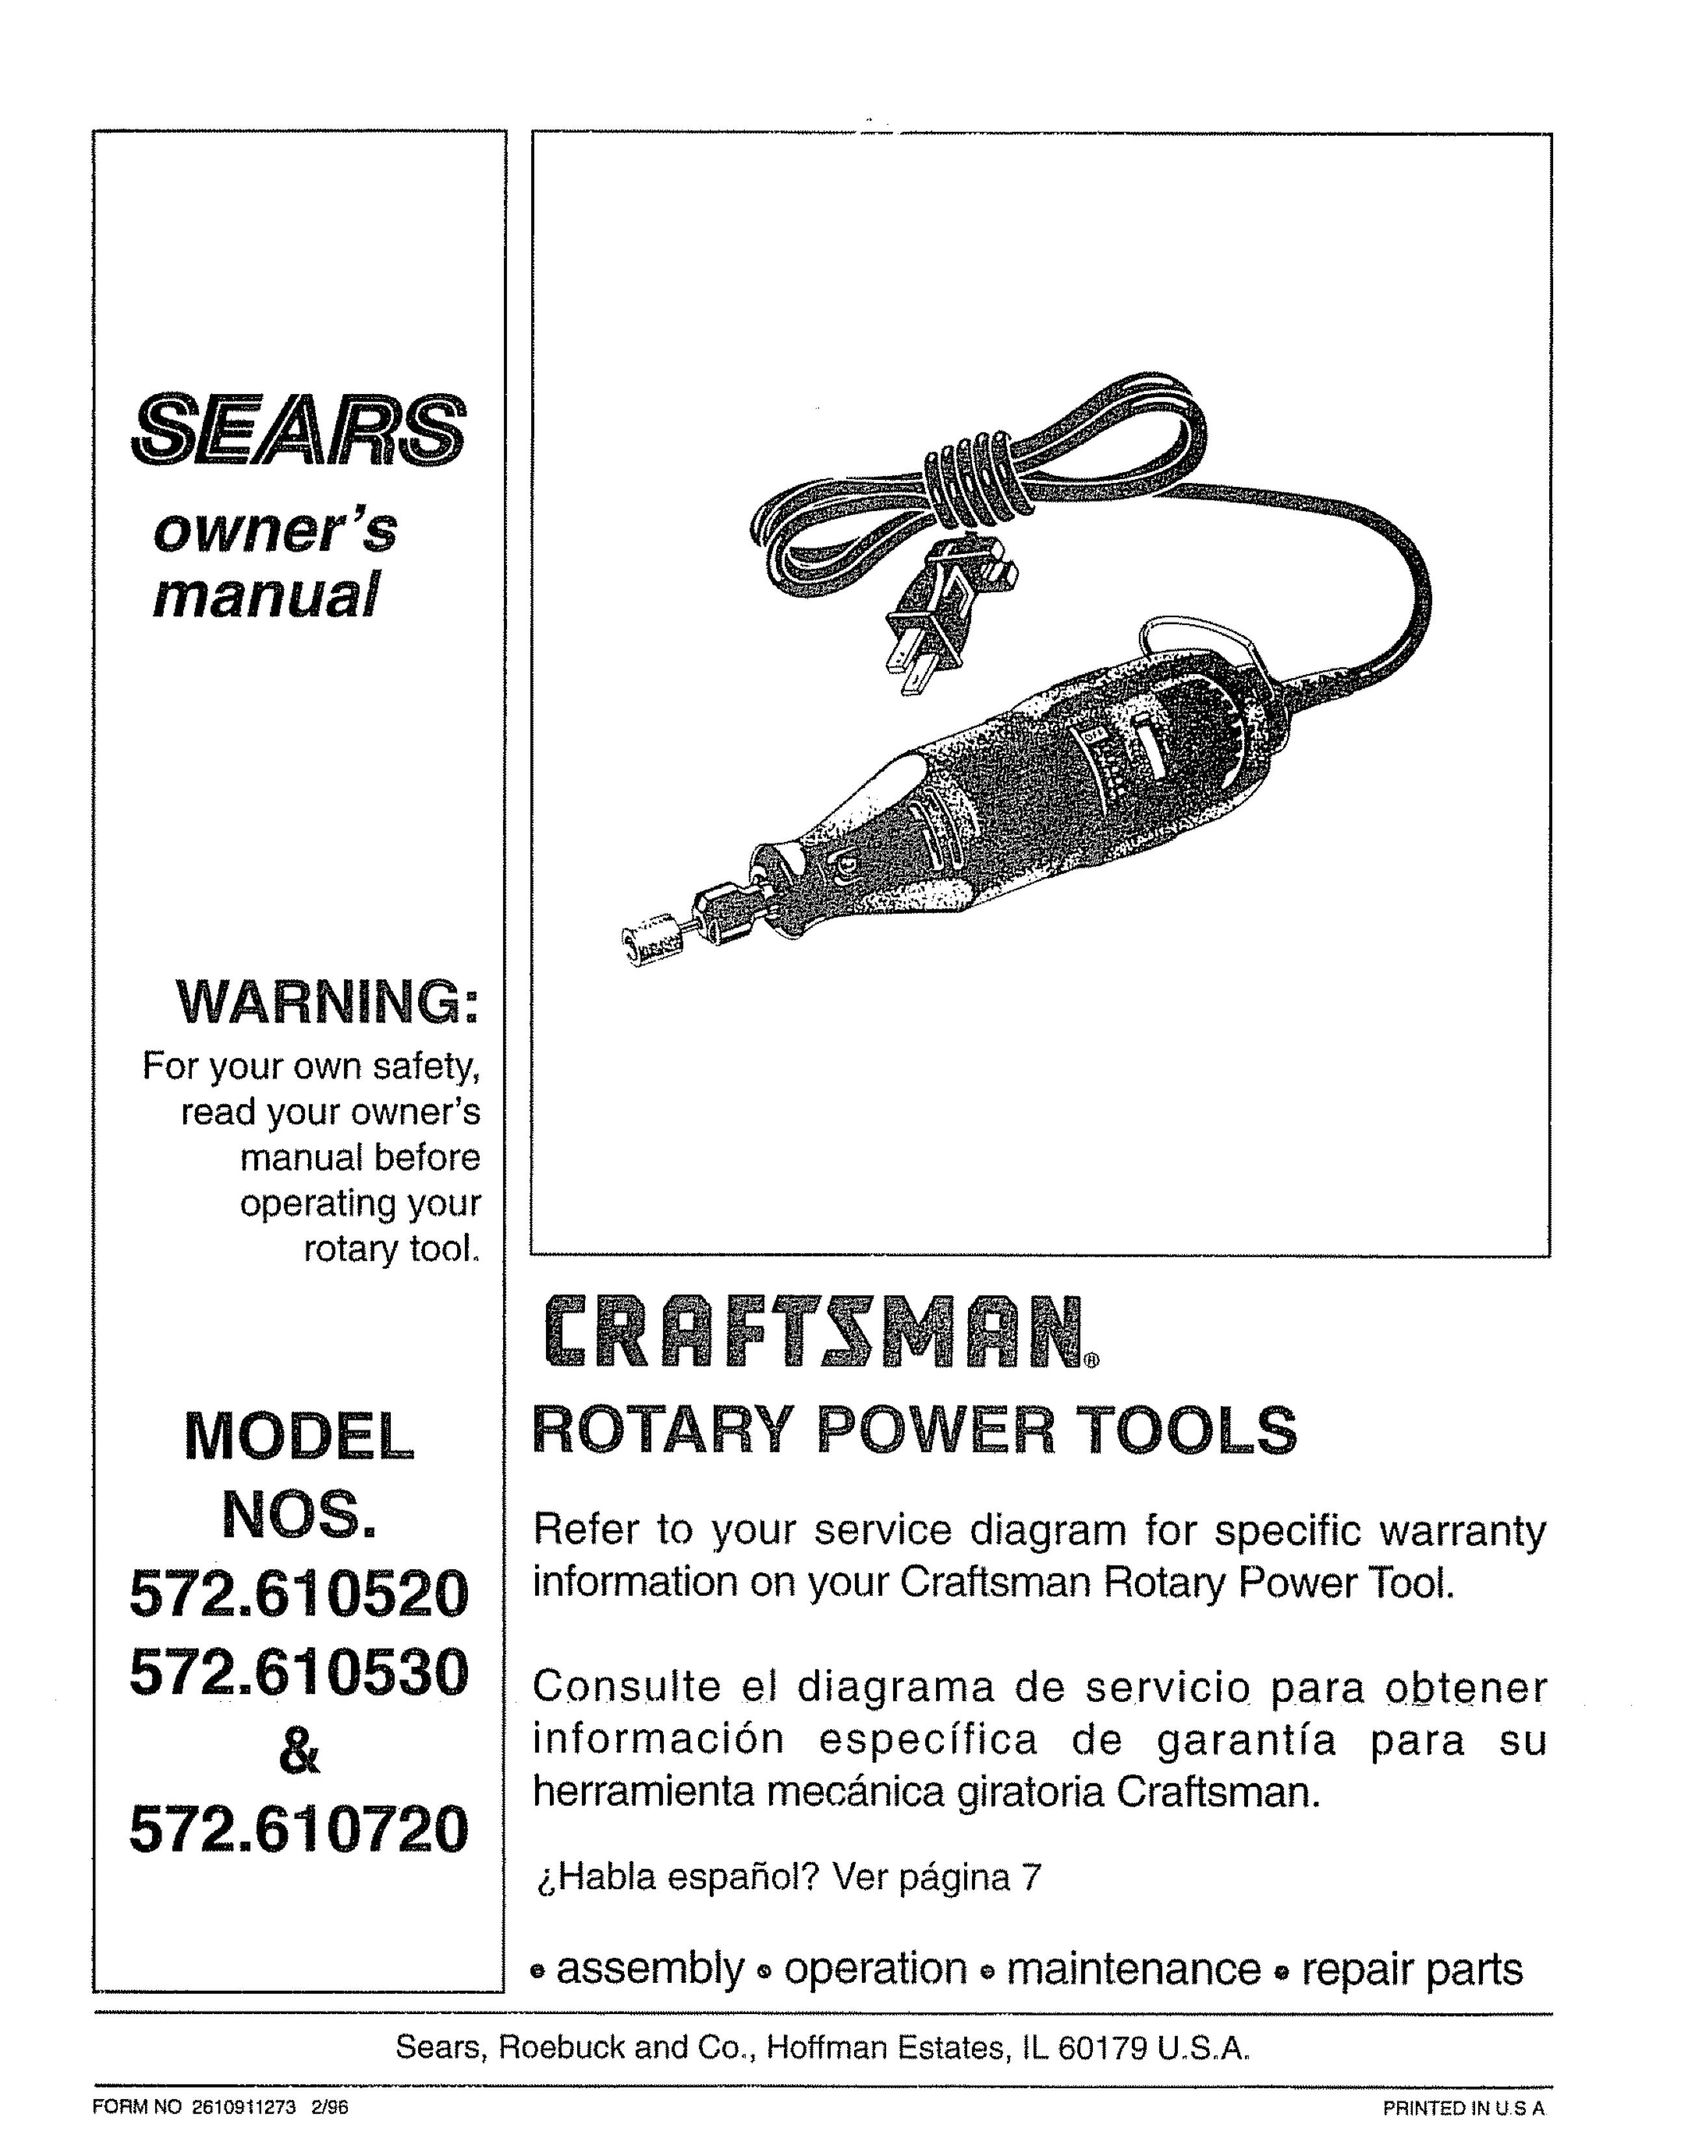 Craftsman 572.610720 Drill User Manual